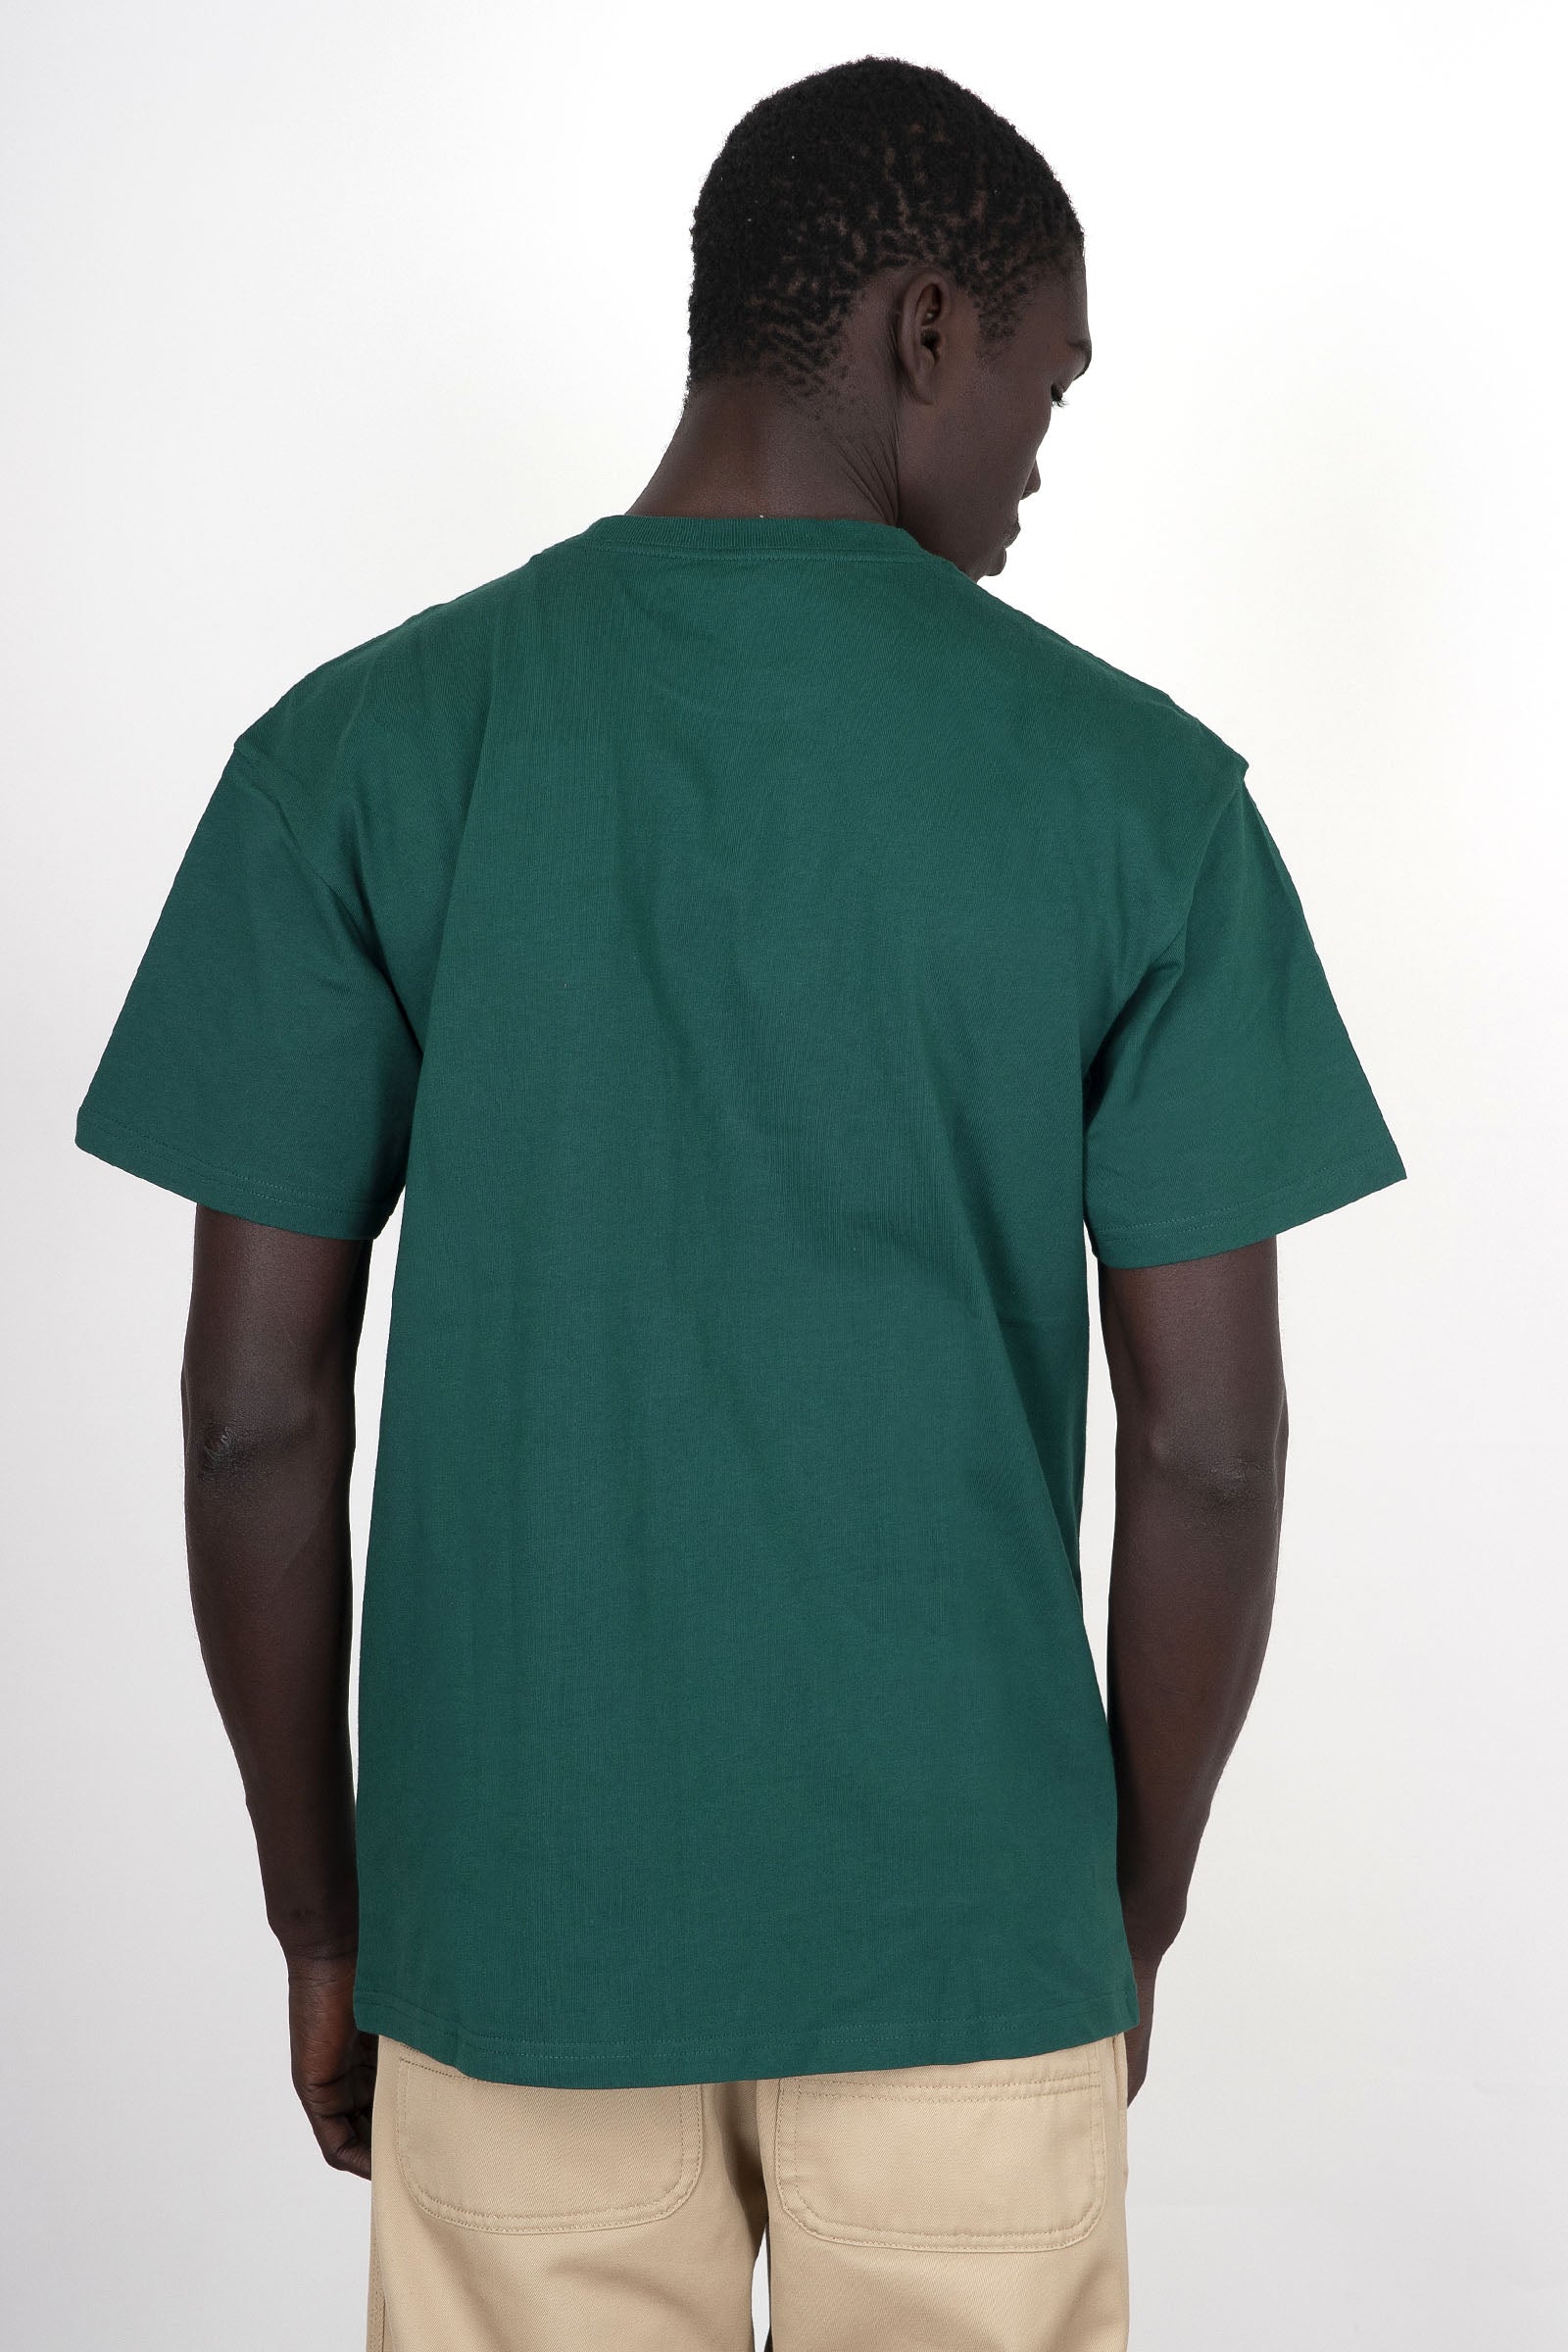 Carhartt Wip T-shirt S/s Chase Verde - 3